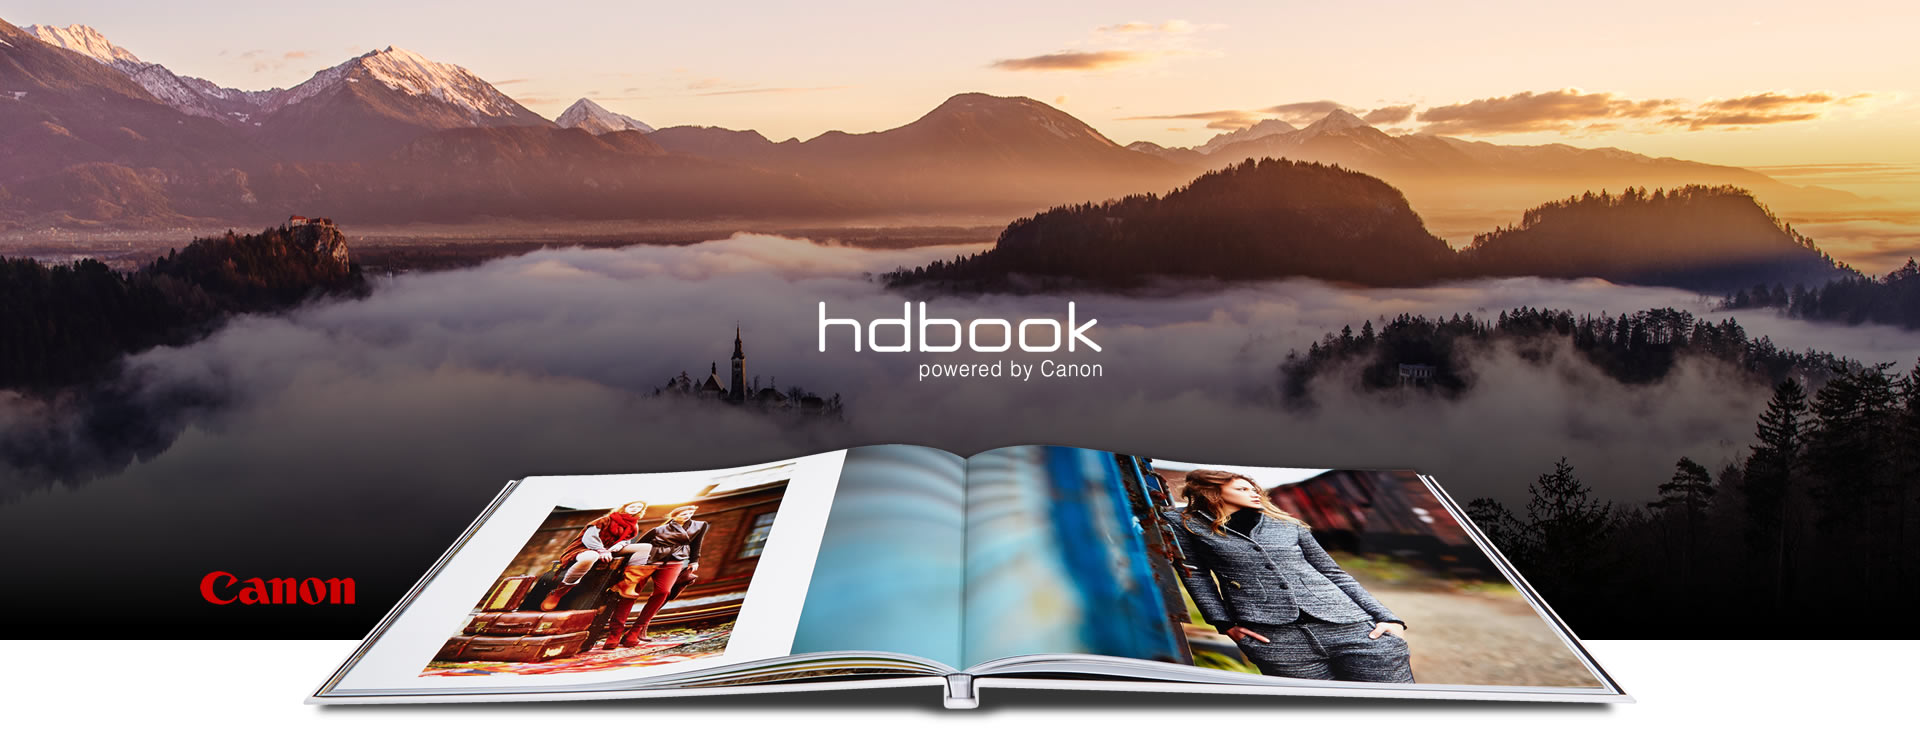 HD BOOK: Album fotografici di qualità incredibile